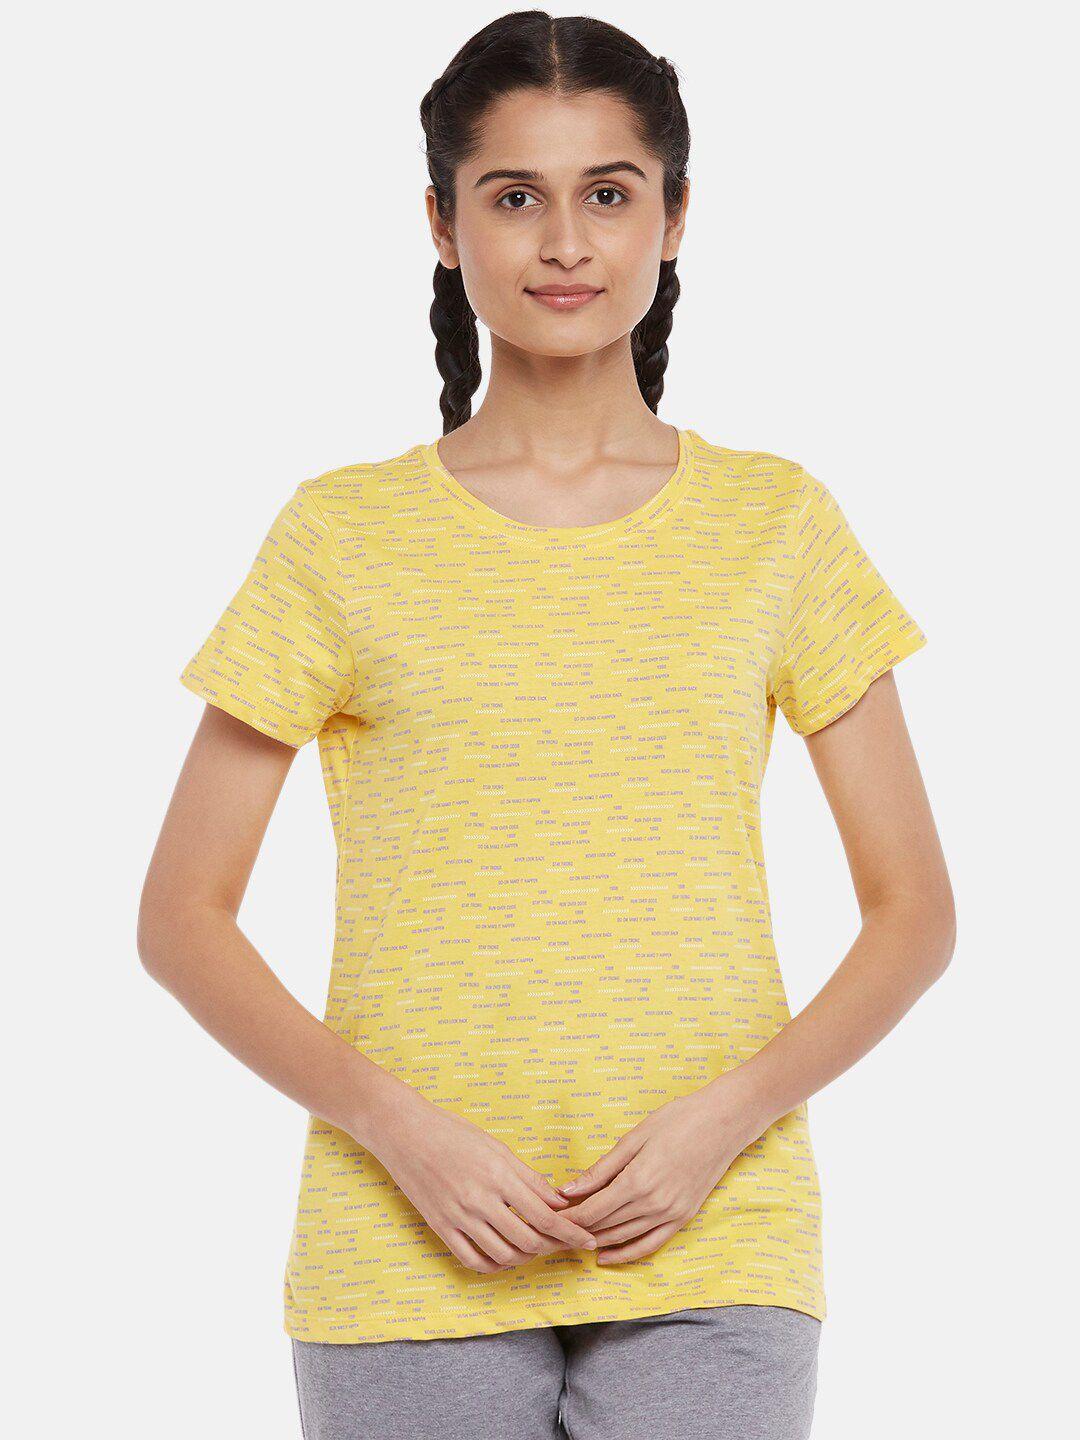 ajile by pantaloons women yellow printed tshirt